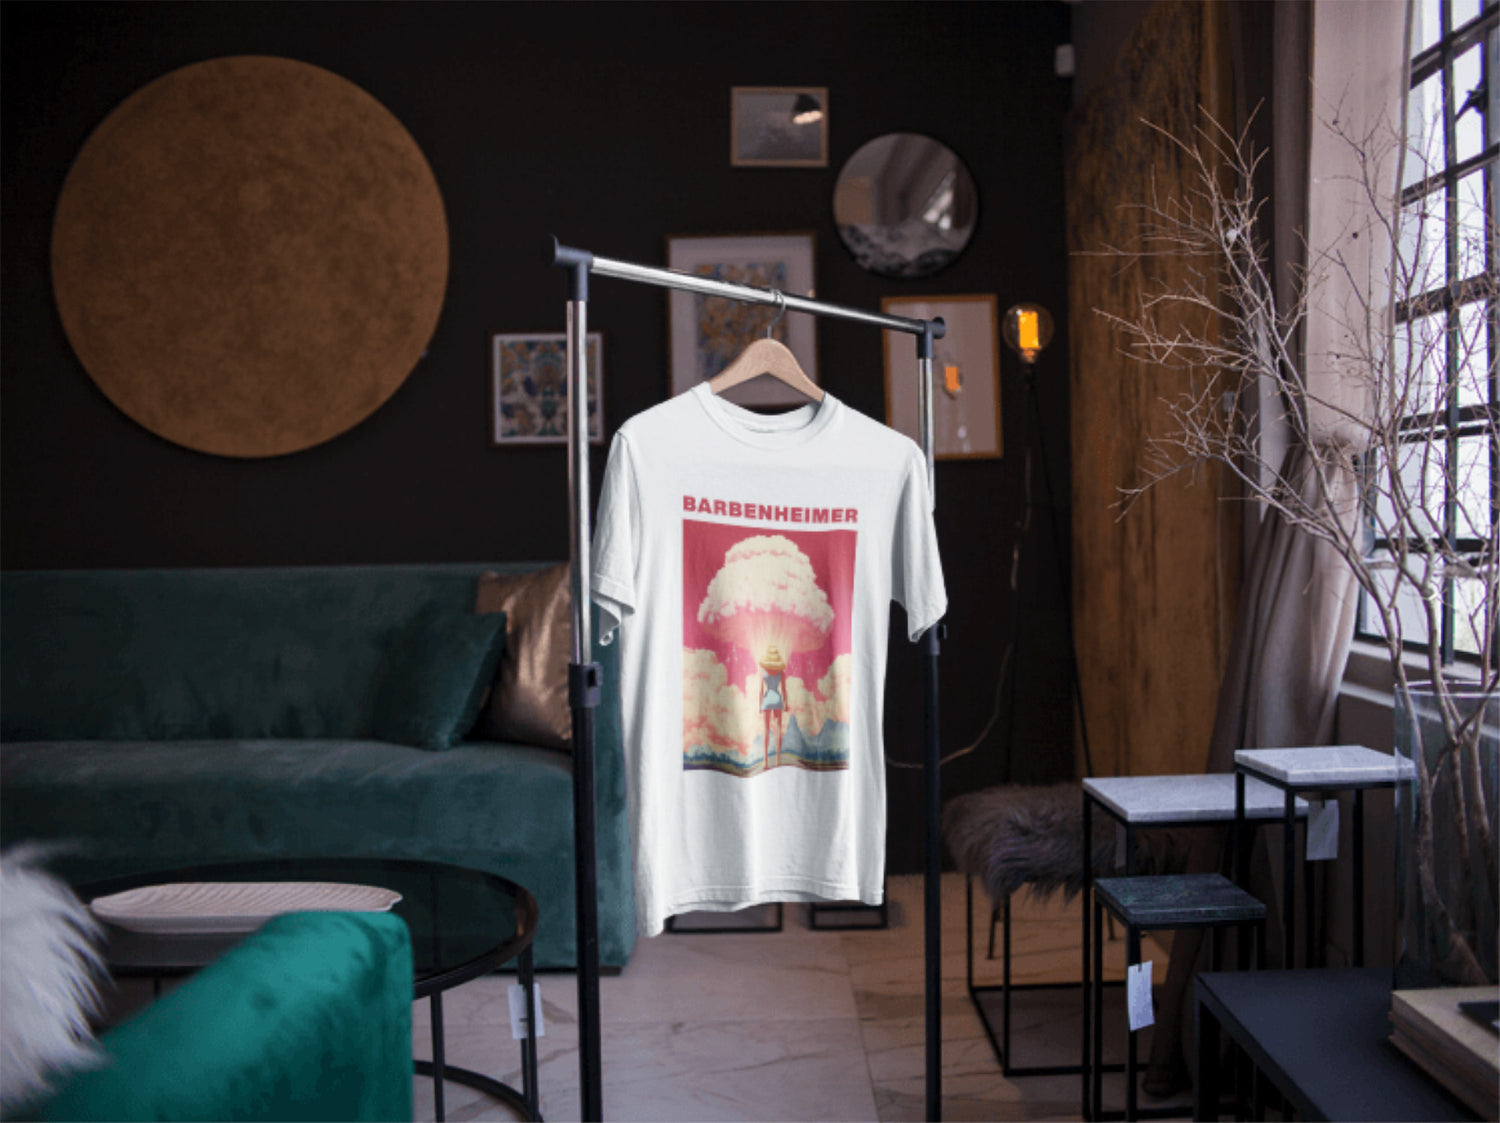 Retro Graphic Tee, Vintage Mushroom Cloud Shirt, 80s Inspired T-Shirt, Bold Statement Apparel, Pop Culture Fashion, Nostalgic Clothing, Retro Design Wear, Cool Graphic Tee, Unique Printed Shirt